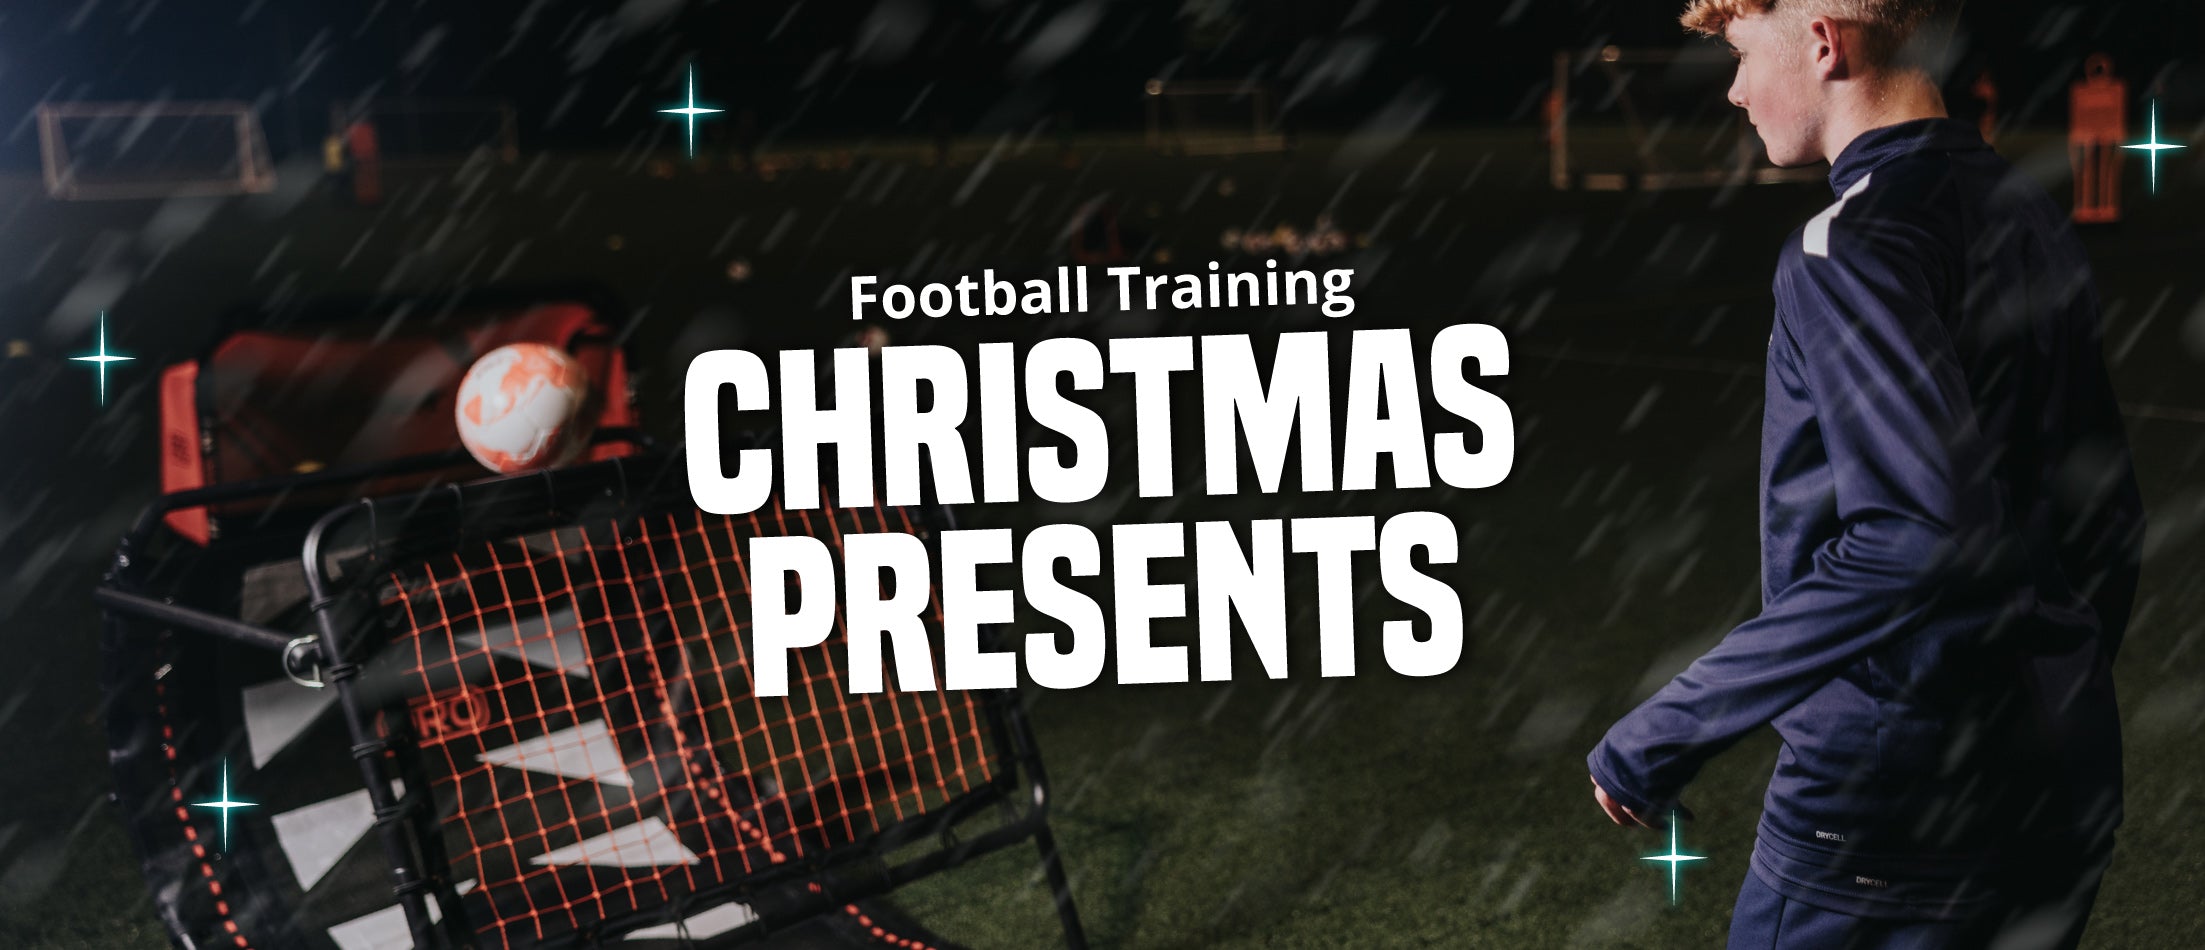 Football Training Christmas Presents